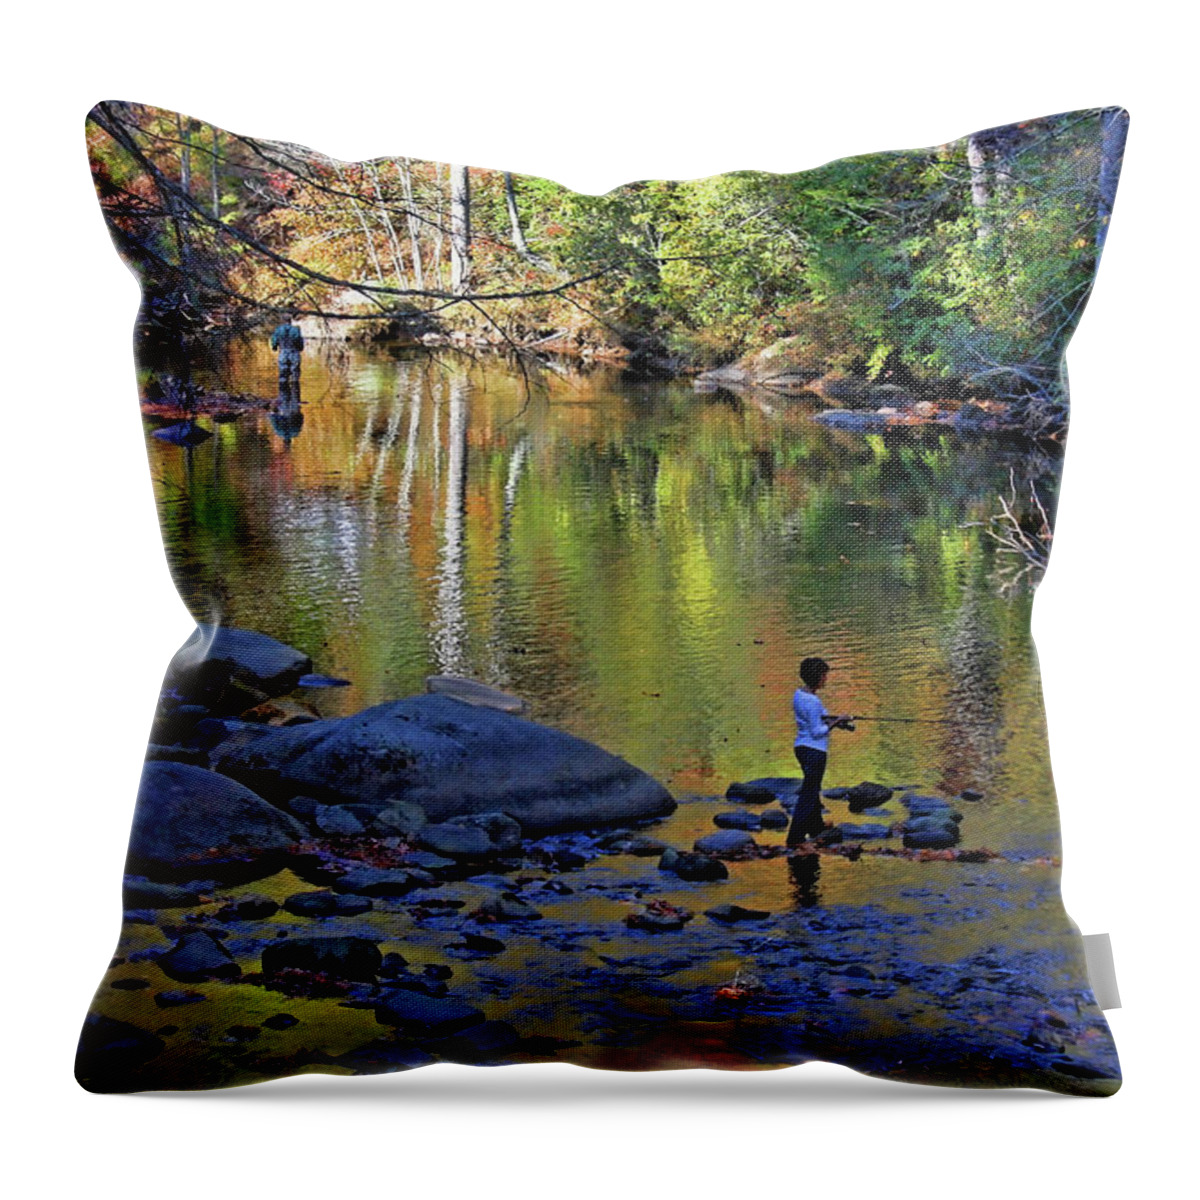 Cullasaja Throw Pillow featuring the photograph Fishing On The Cullasaja River by HH Photography of Florida